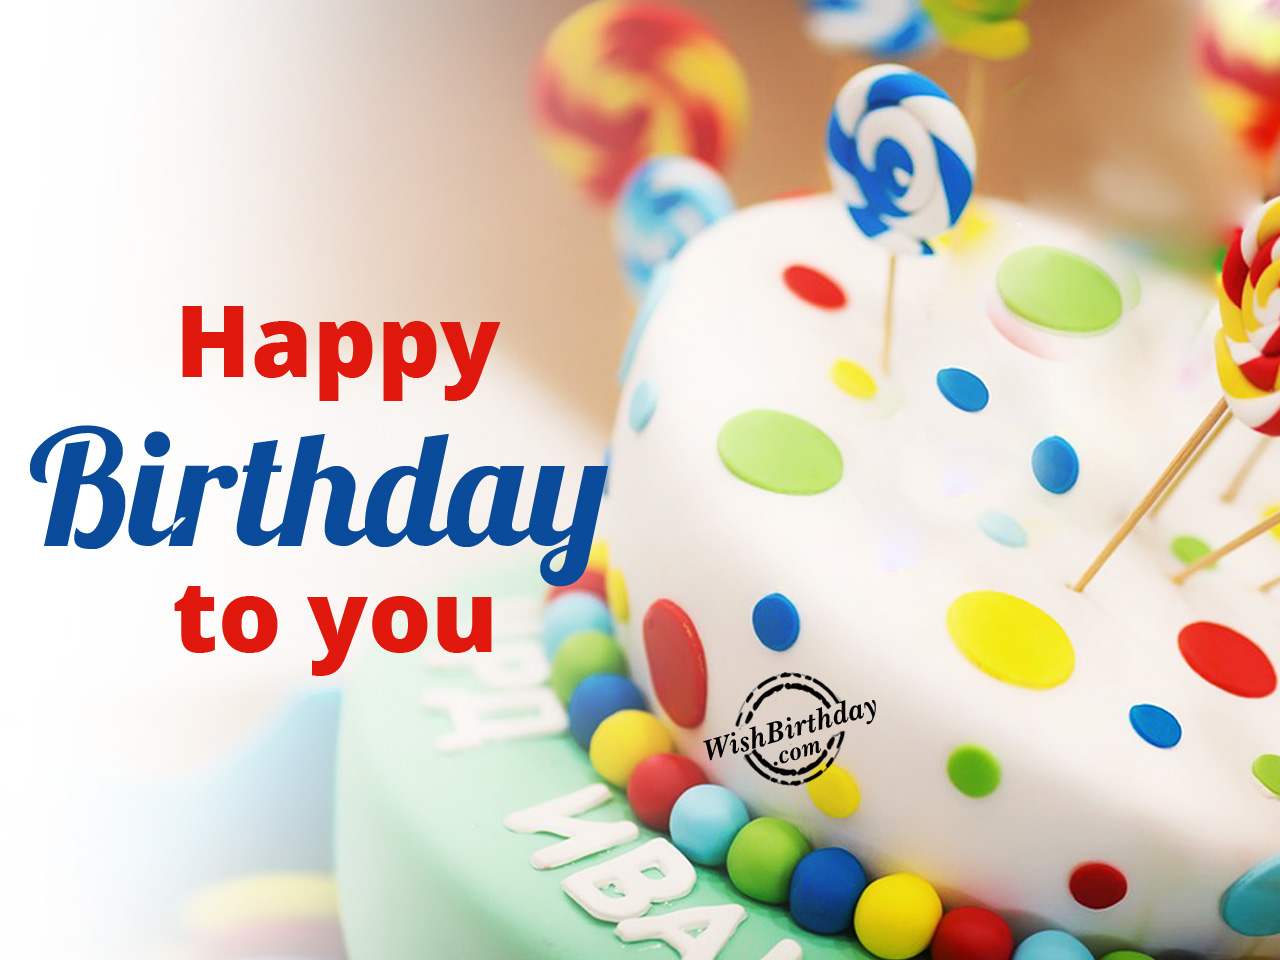 Happy Birthday to you - WishBirthday.com